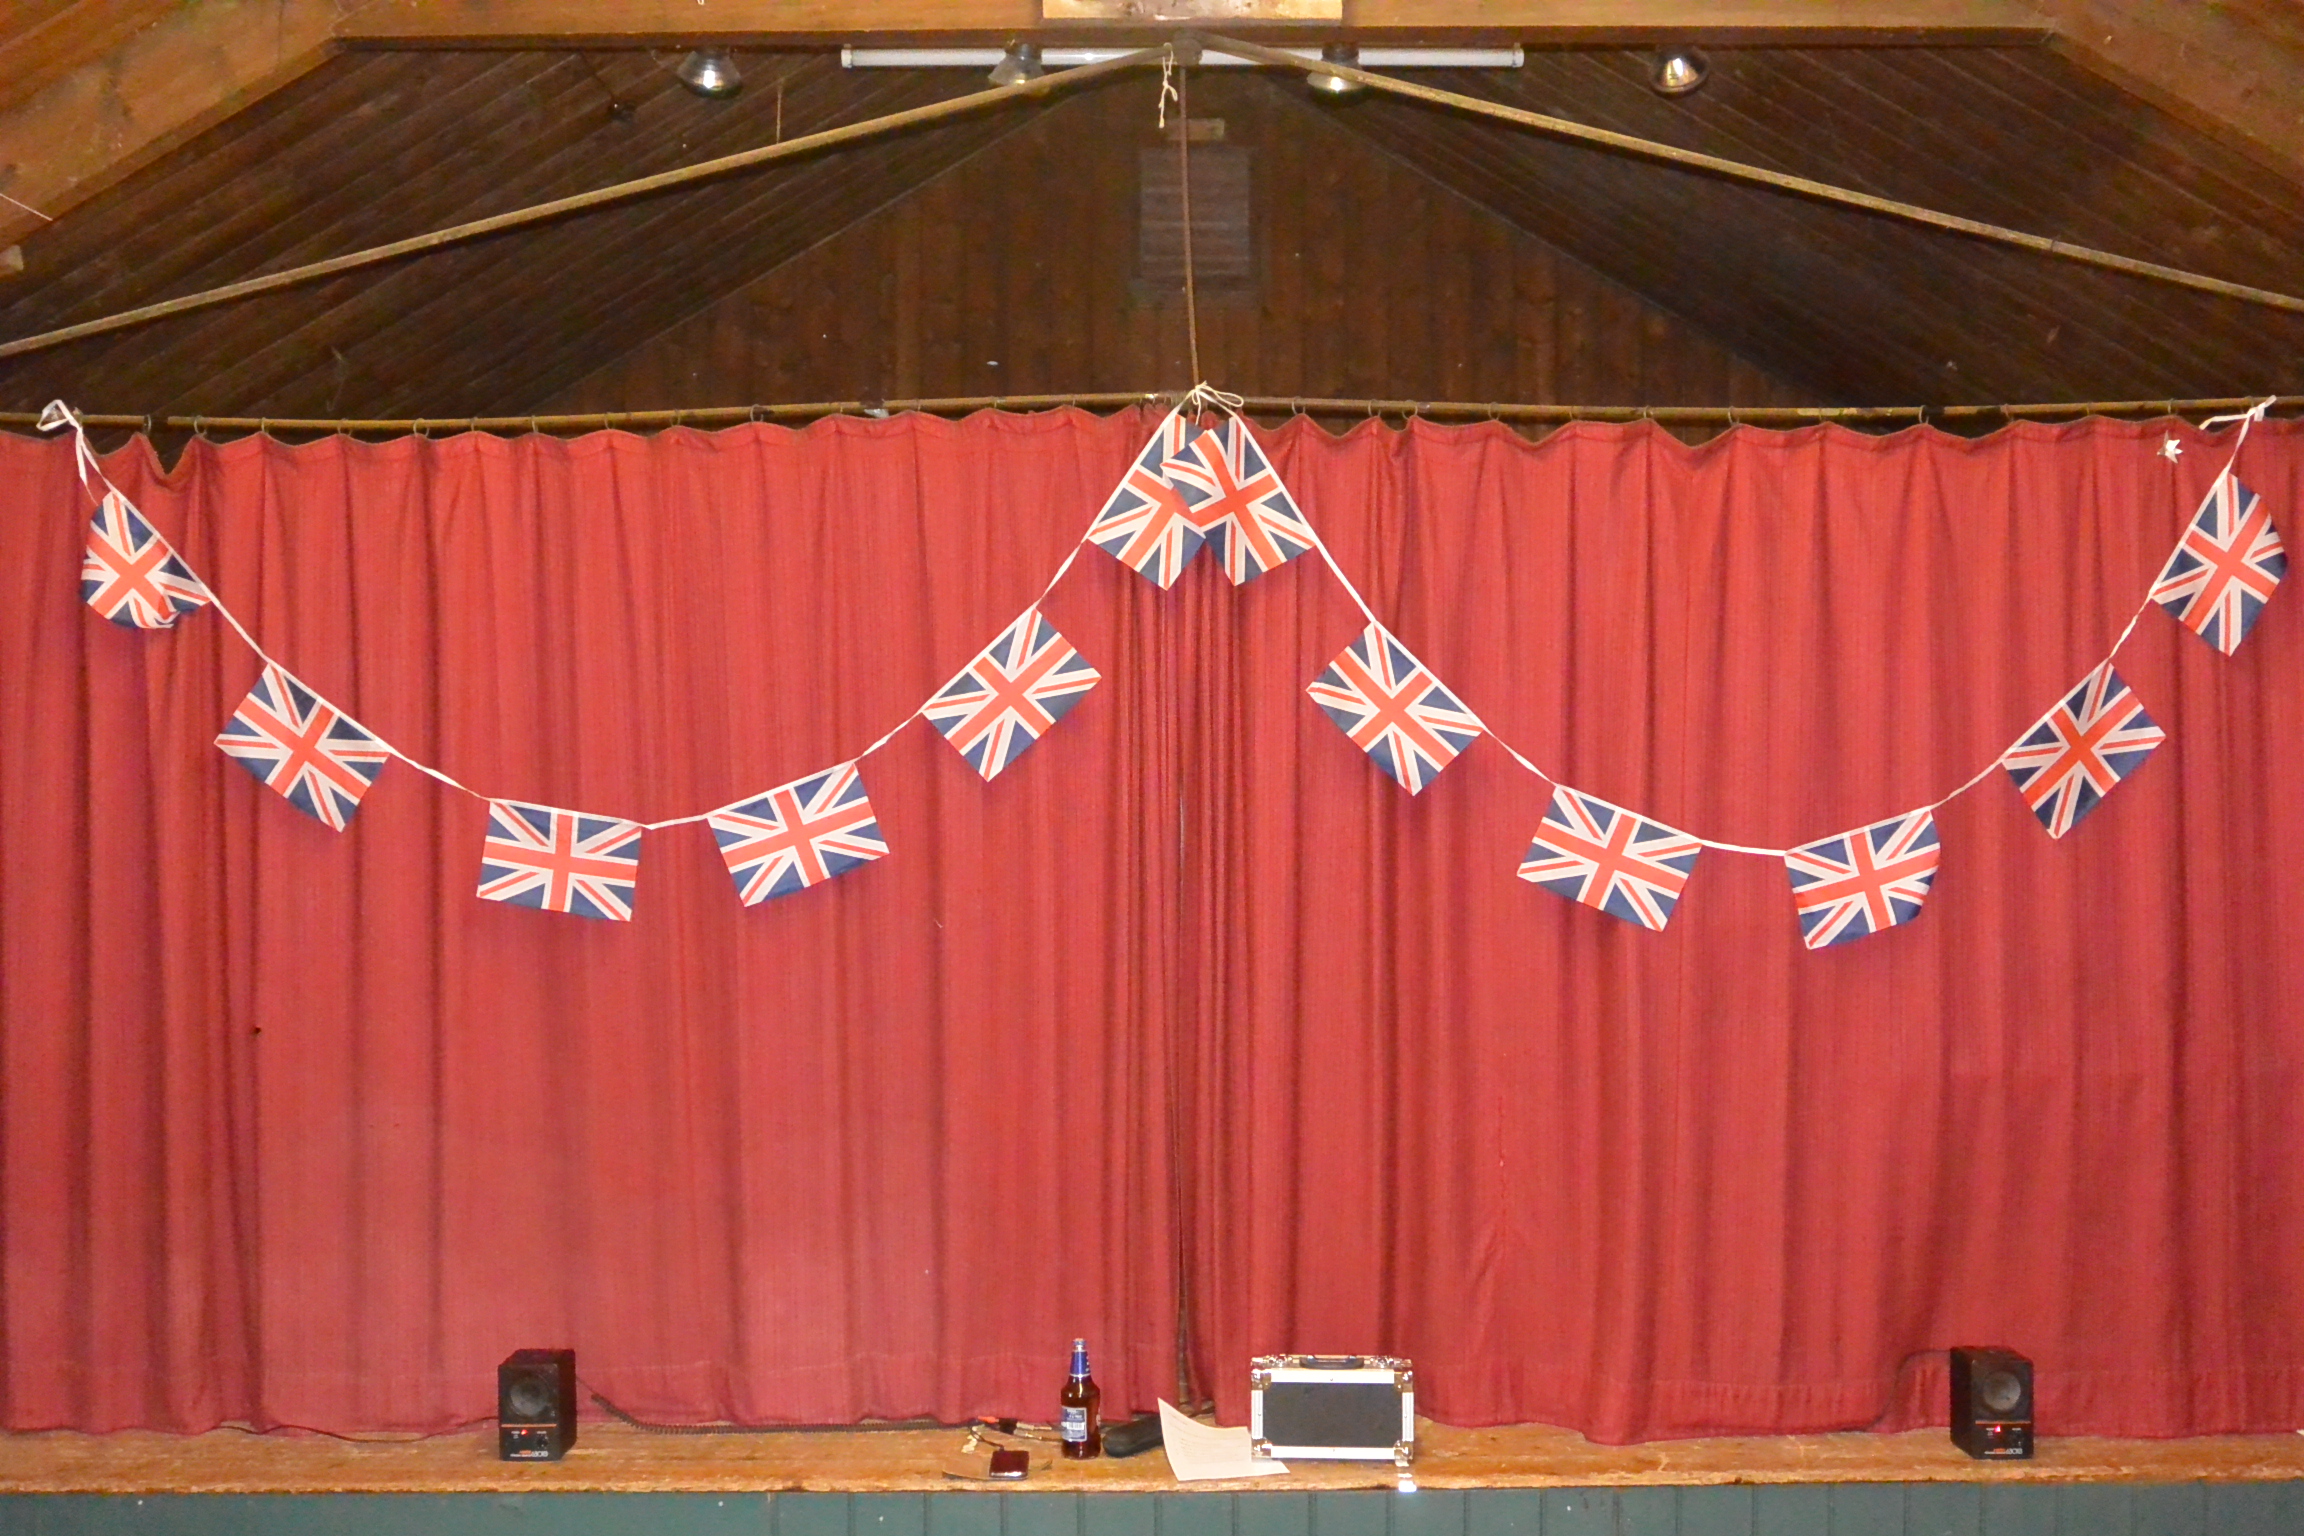 Union flags against curtain